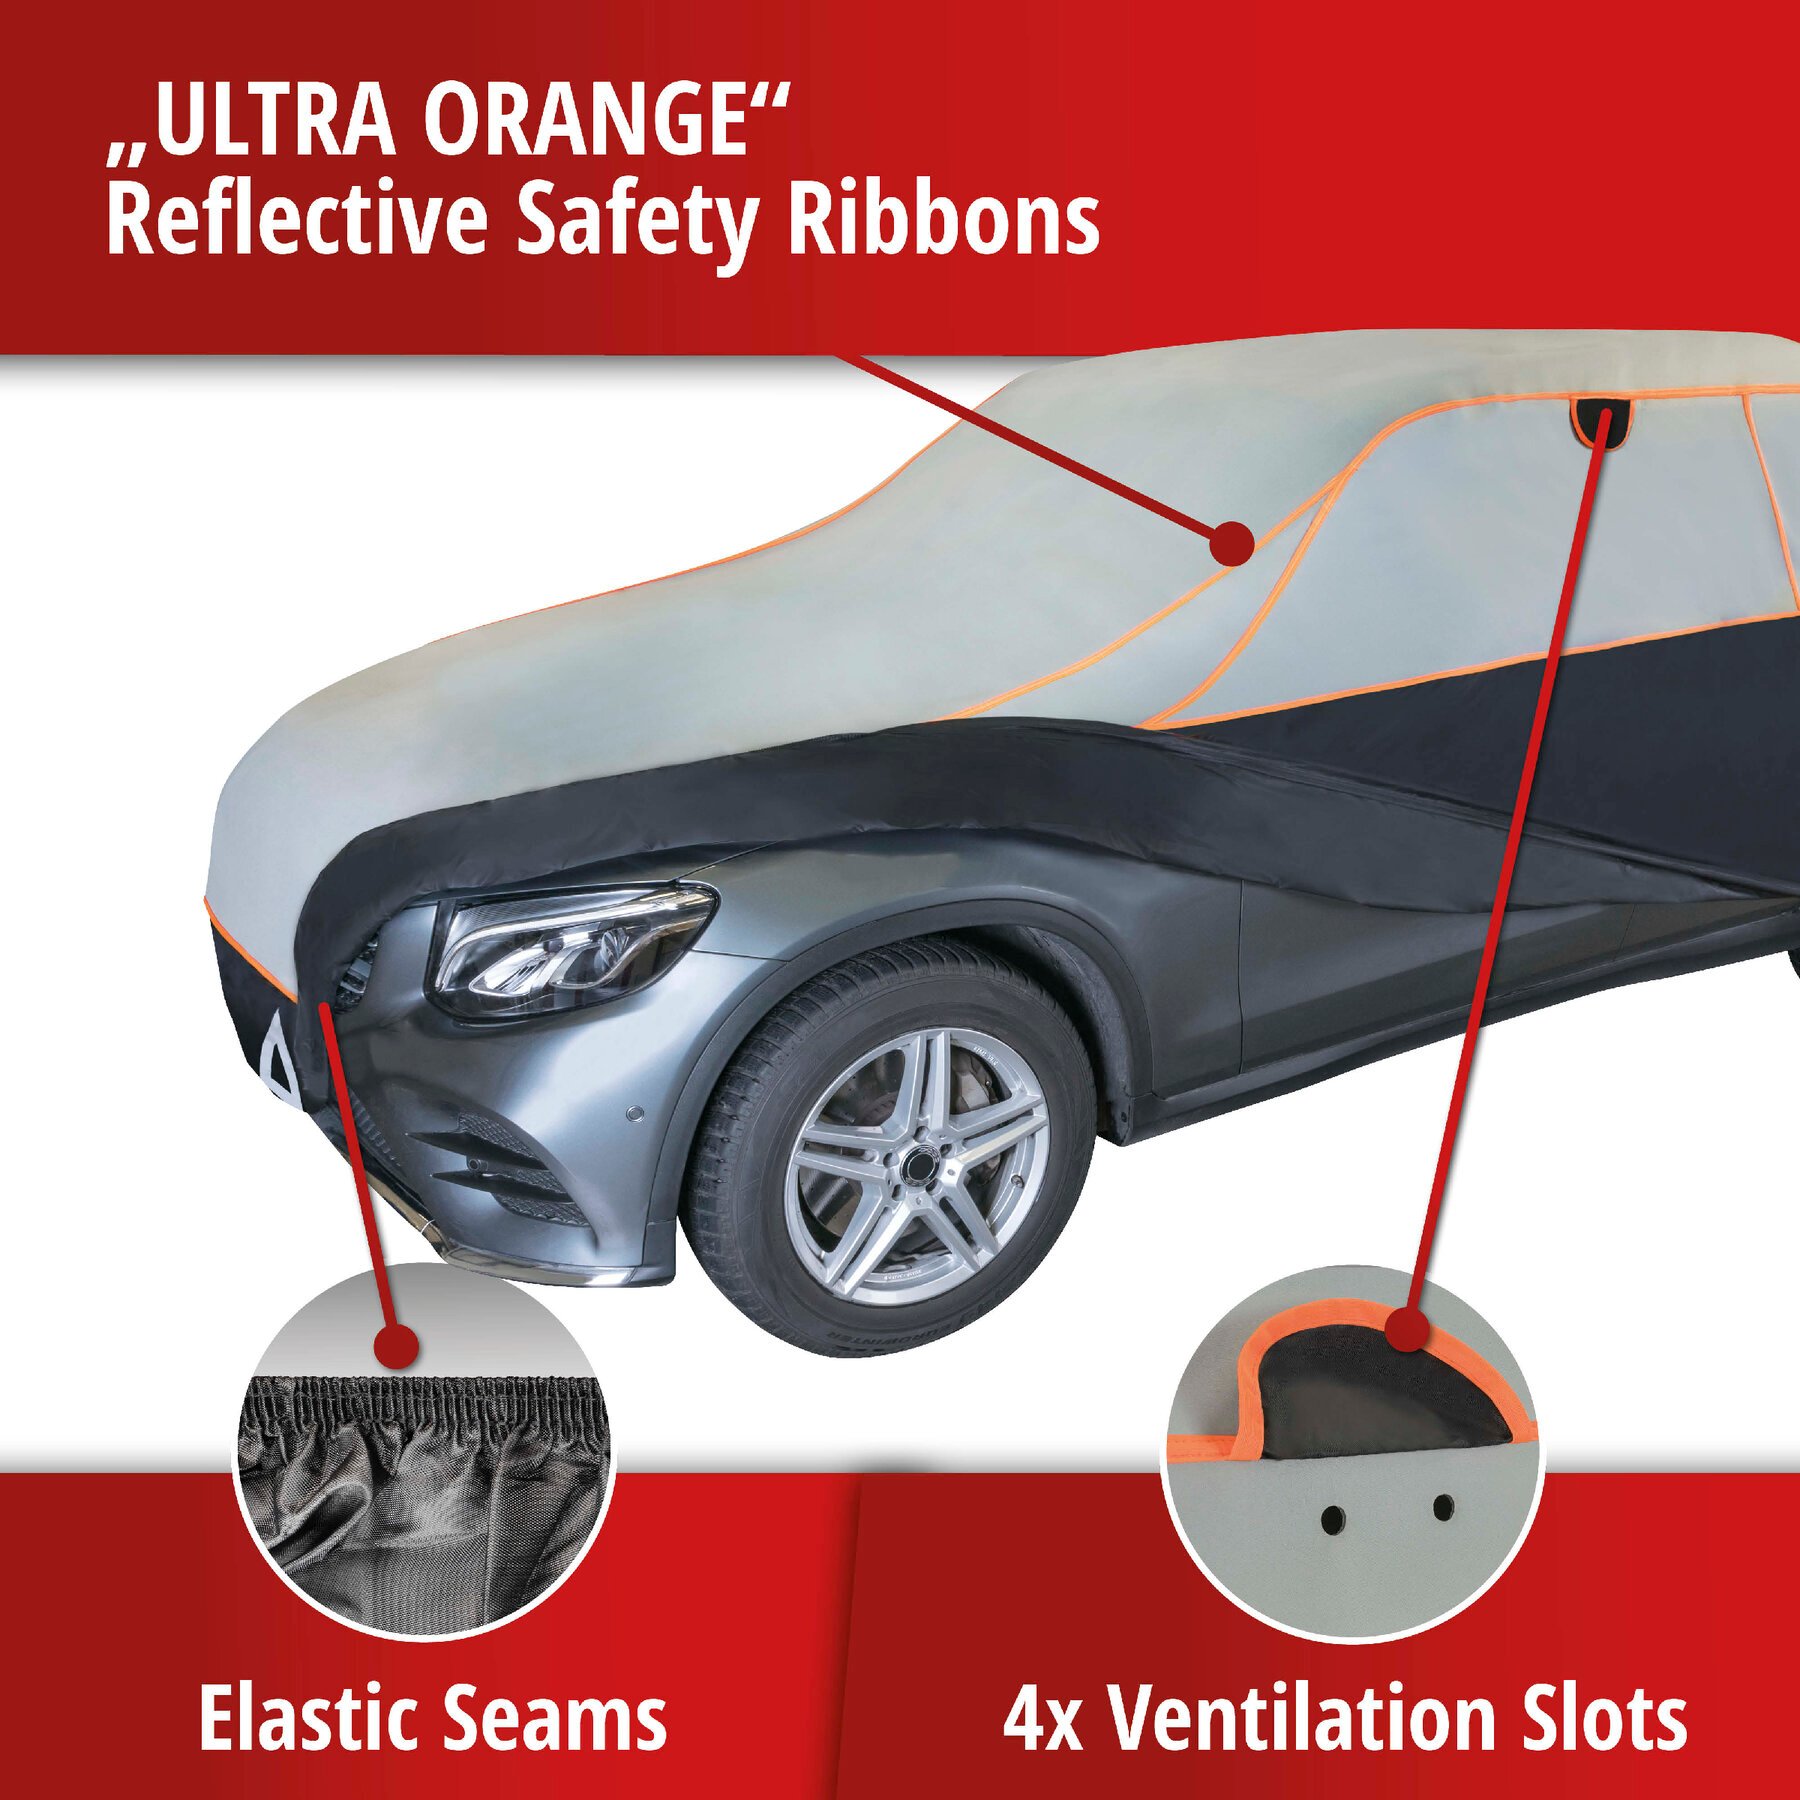 Car hail protection tarpaulin Perma Protect SUV size L